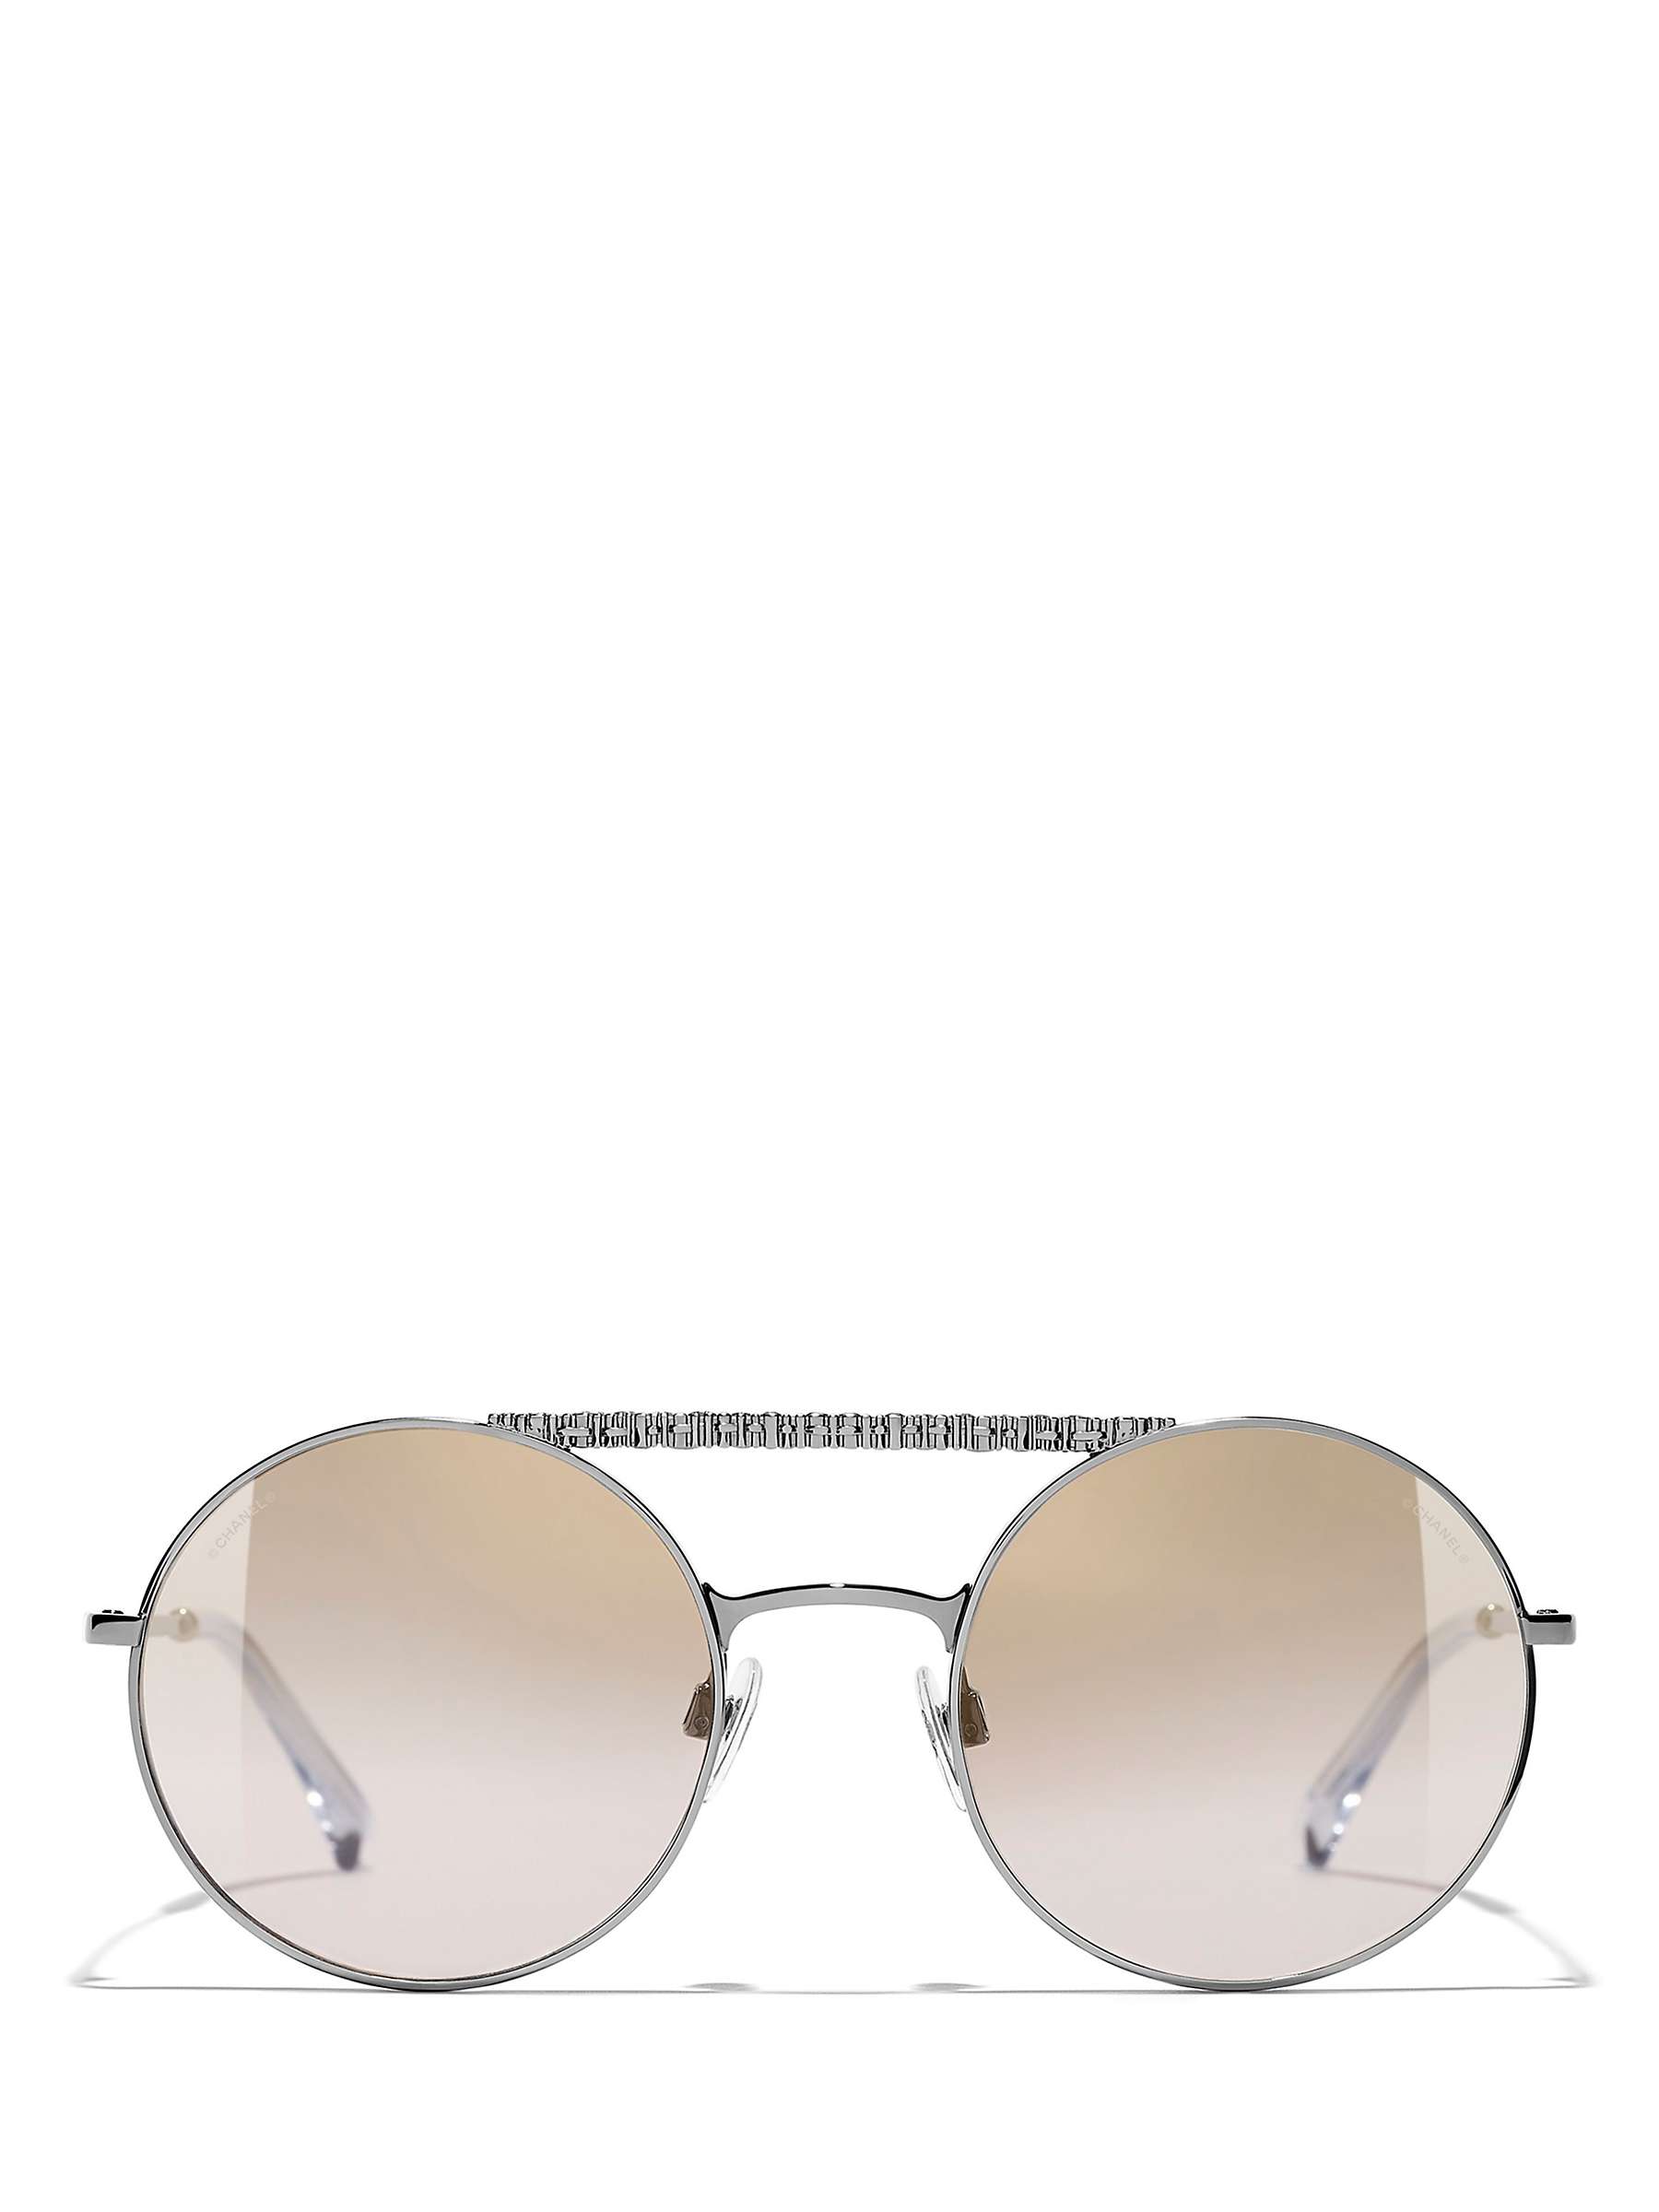 Buy CHANEL Round Sunglasses CH4232 Gunmetal/Brown Gradient Online at johnlewis.com